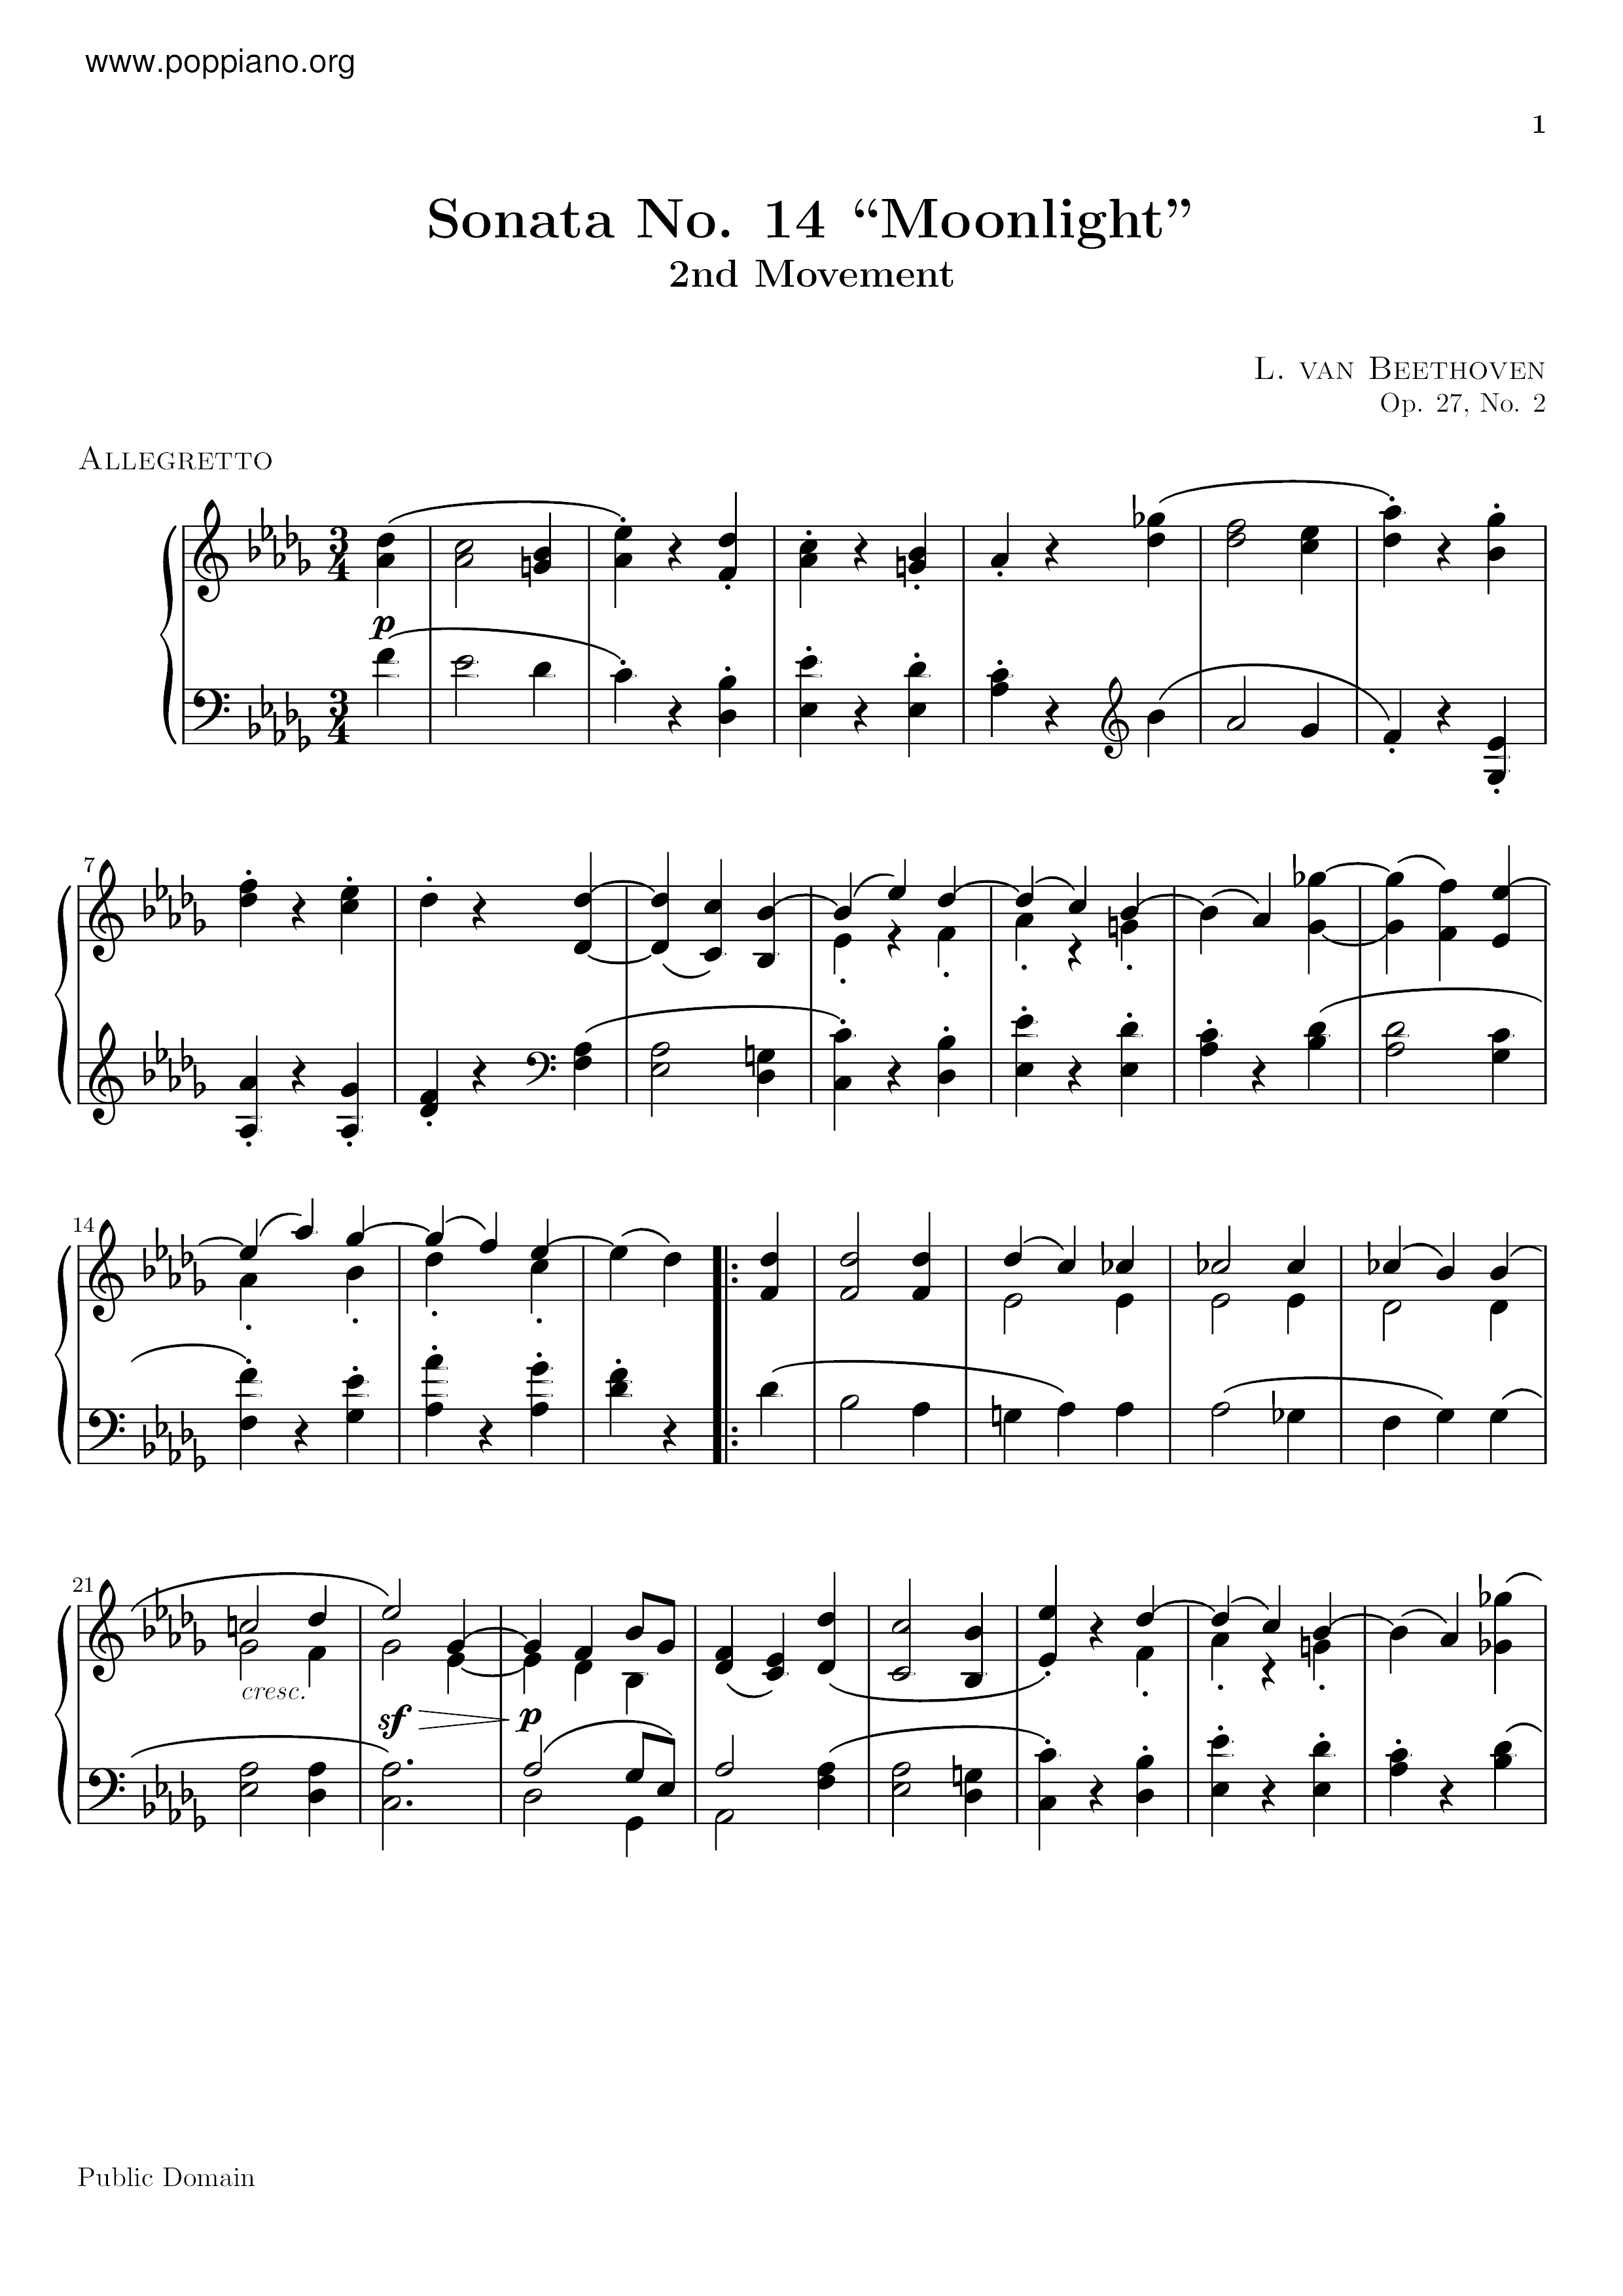 Moonlight Sonata Op. 27 No. 2 Mov 2 (月光奏鳴曲) Score